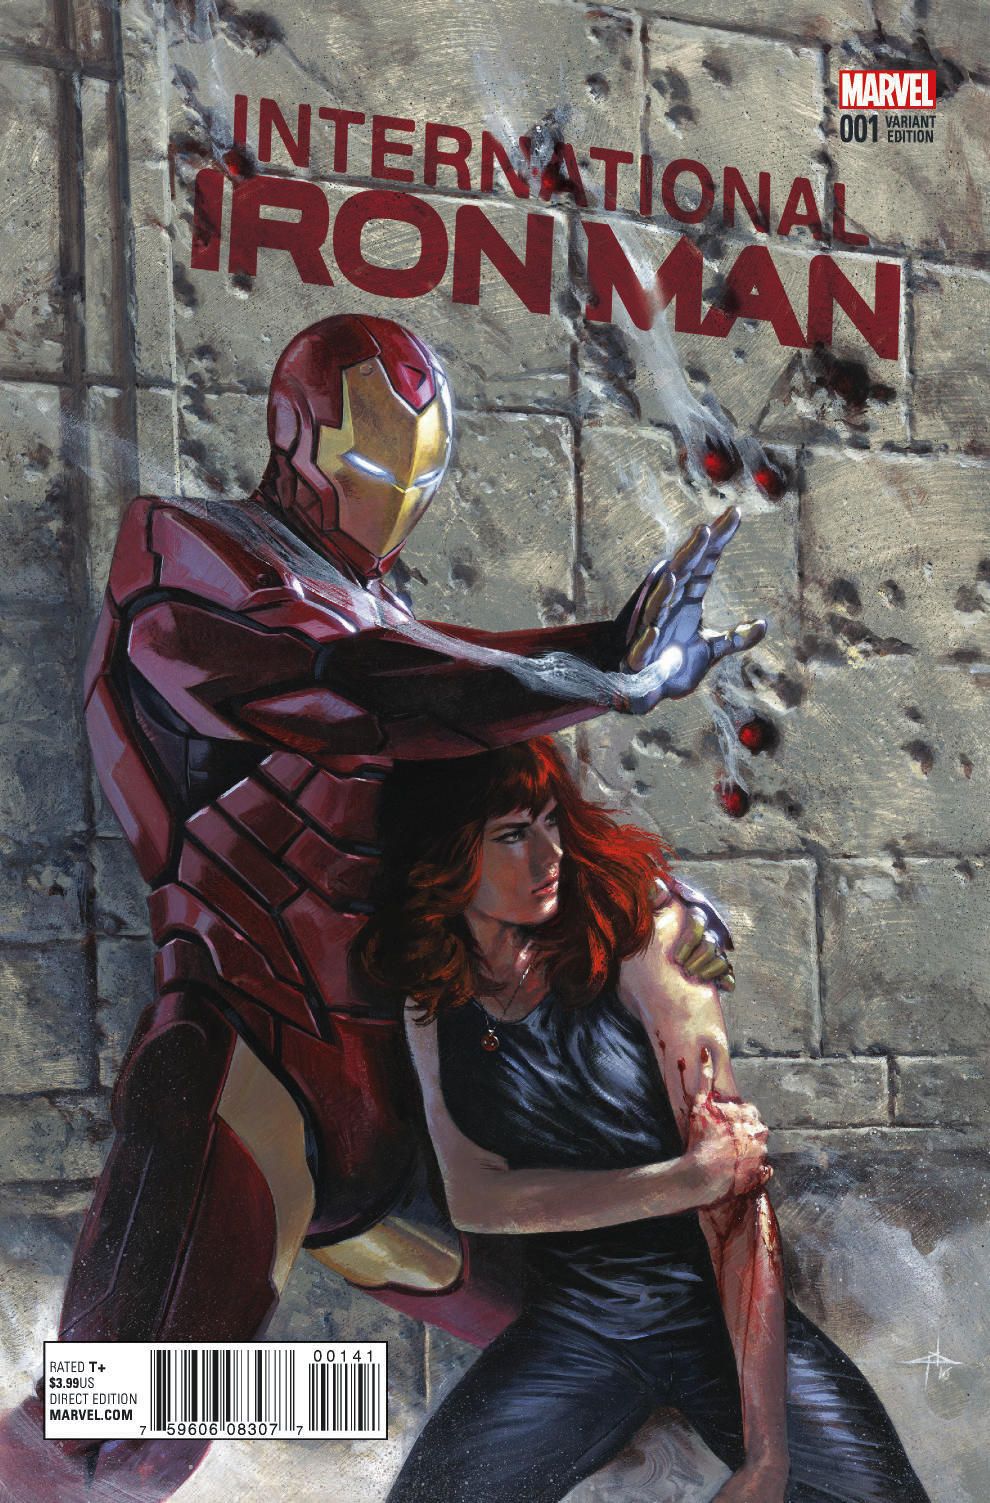 Marvel Comics Reveals First Look at International Iron Man